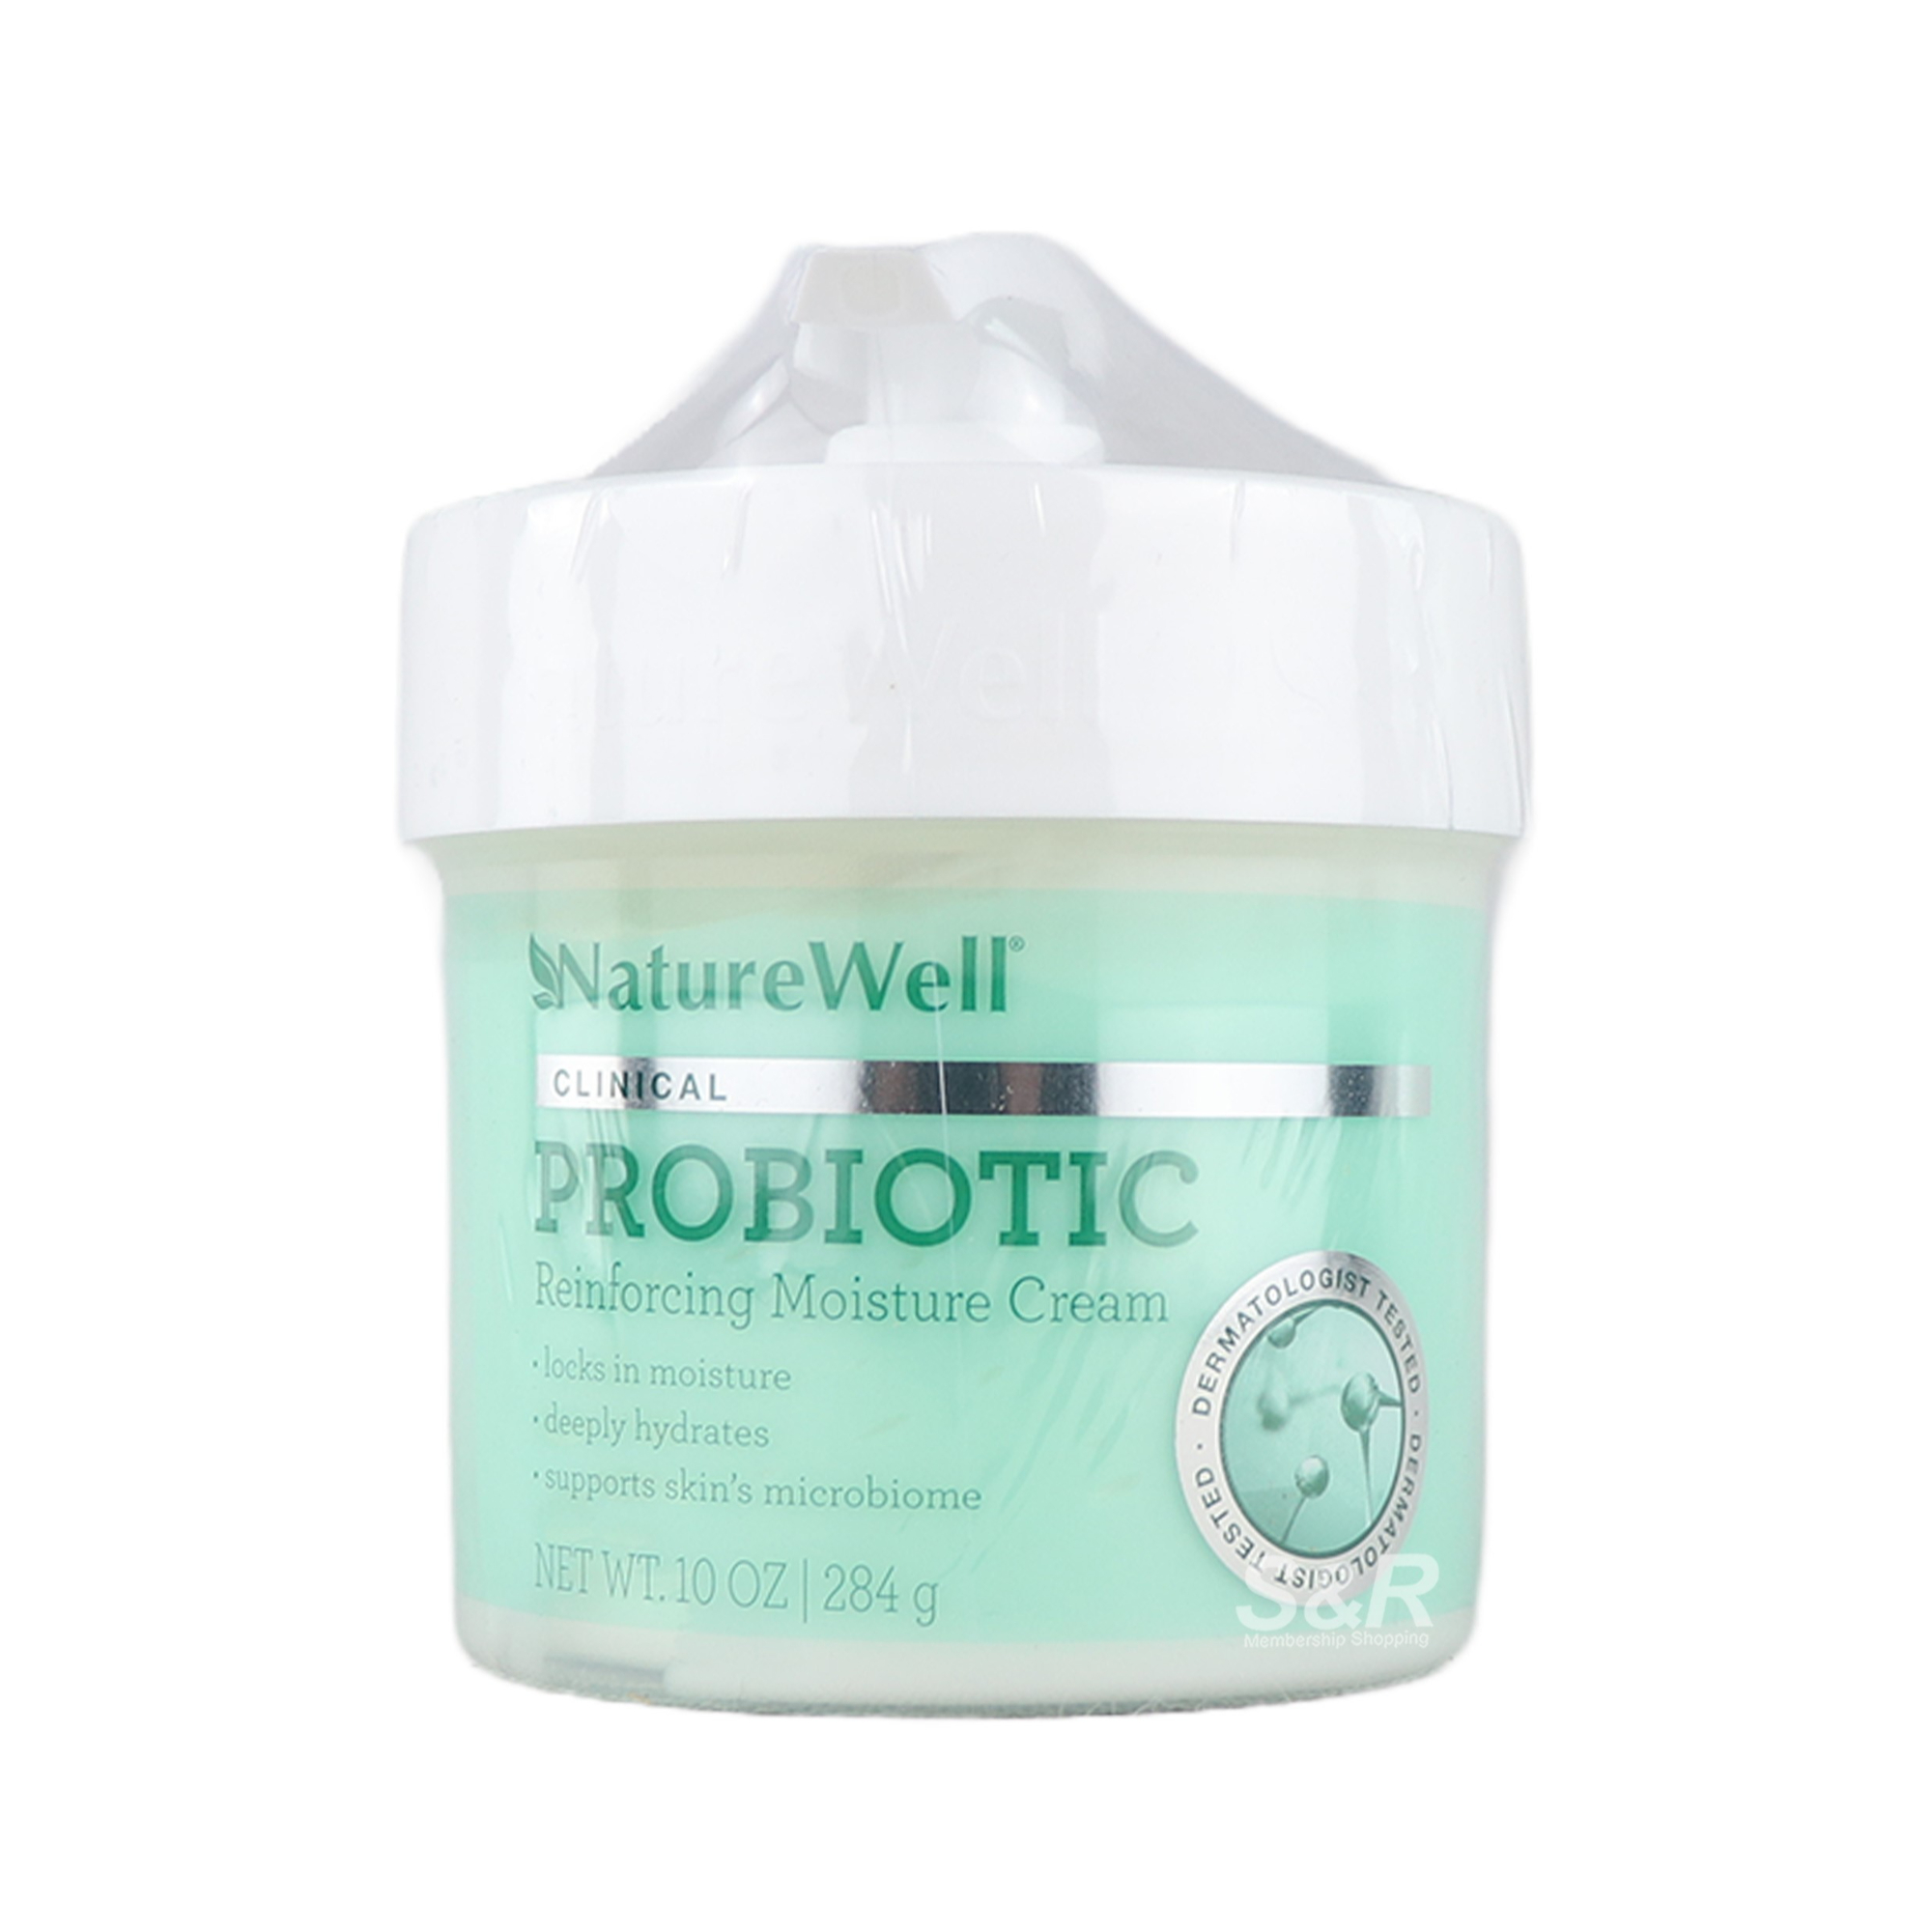 NatureWell Probiotic Reinforcing Moisture Cream 284g